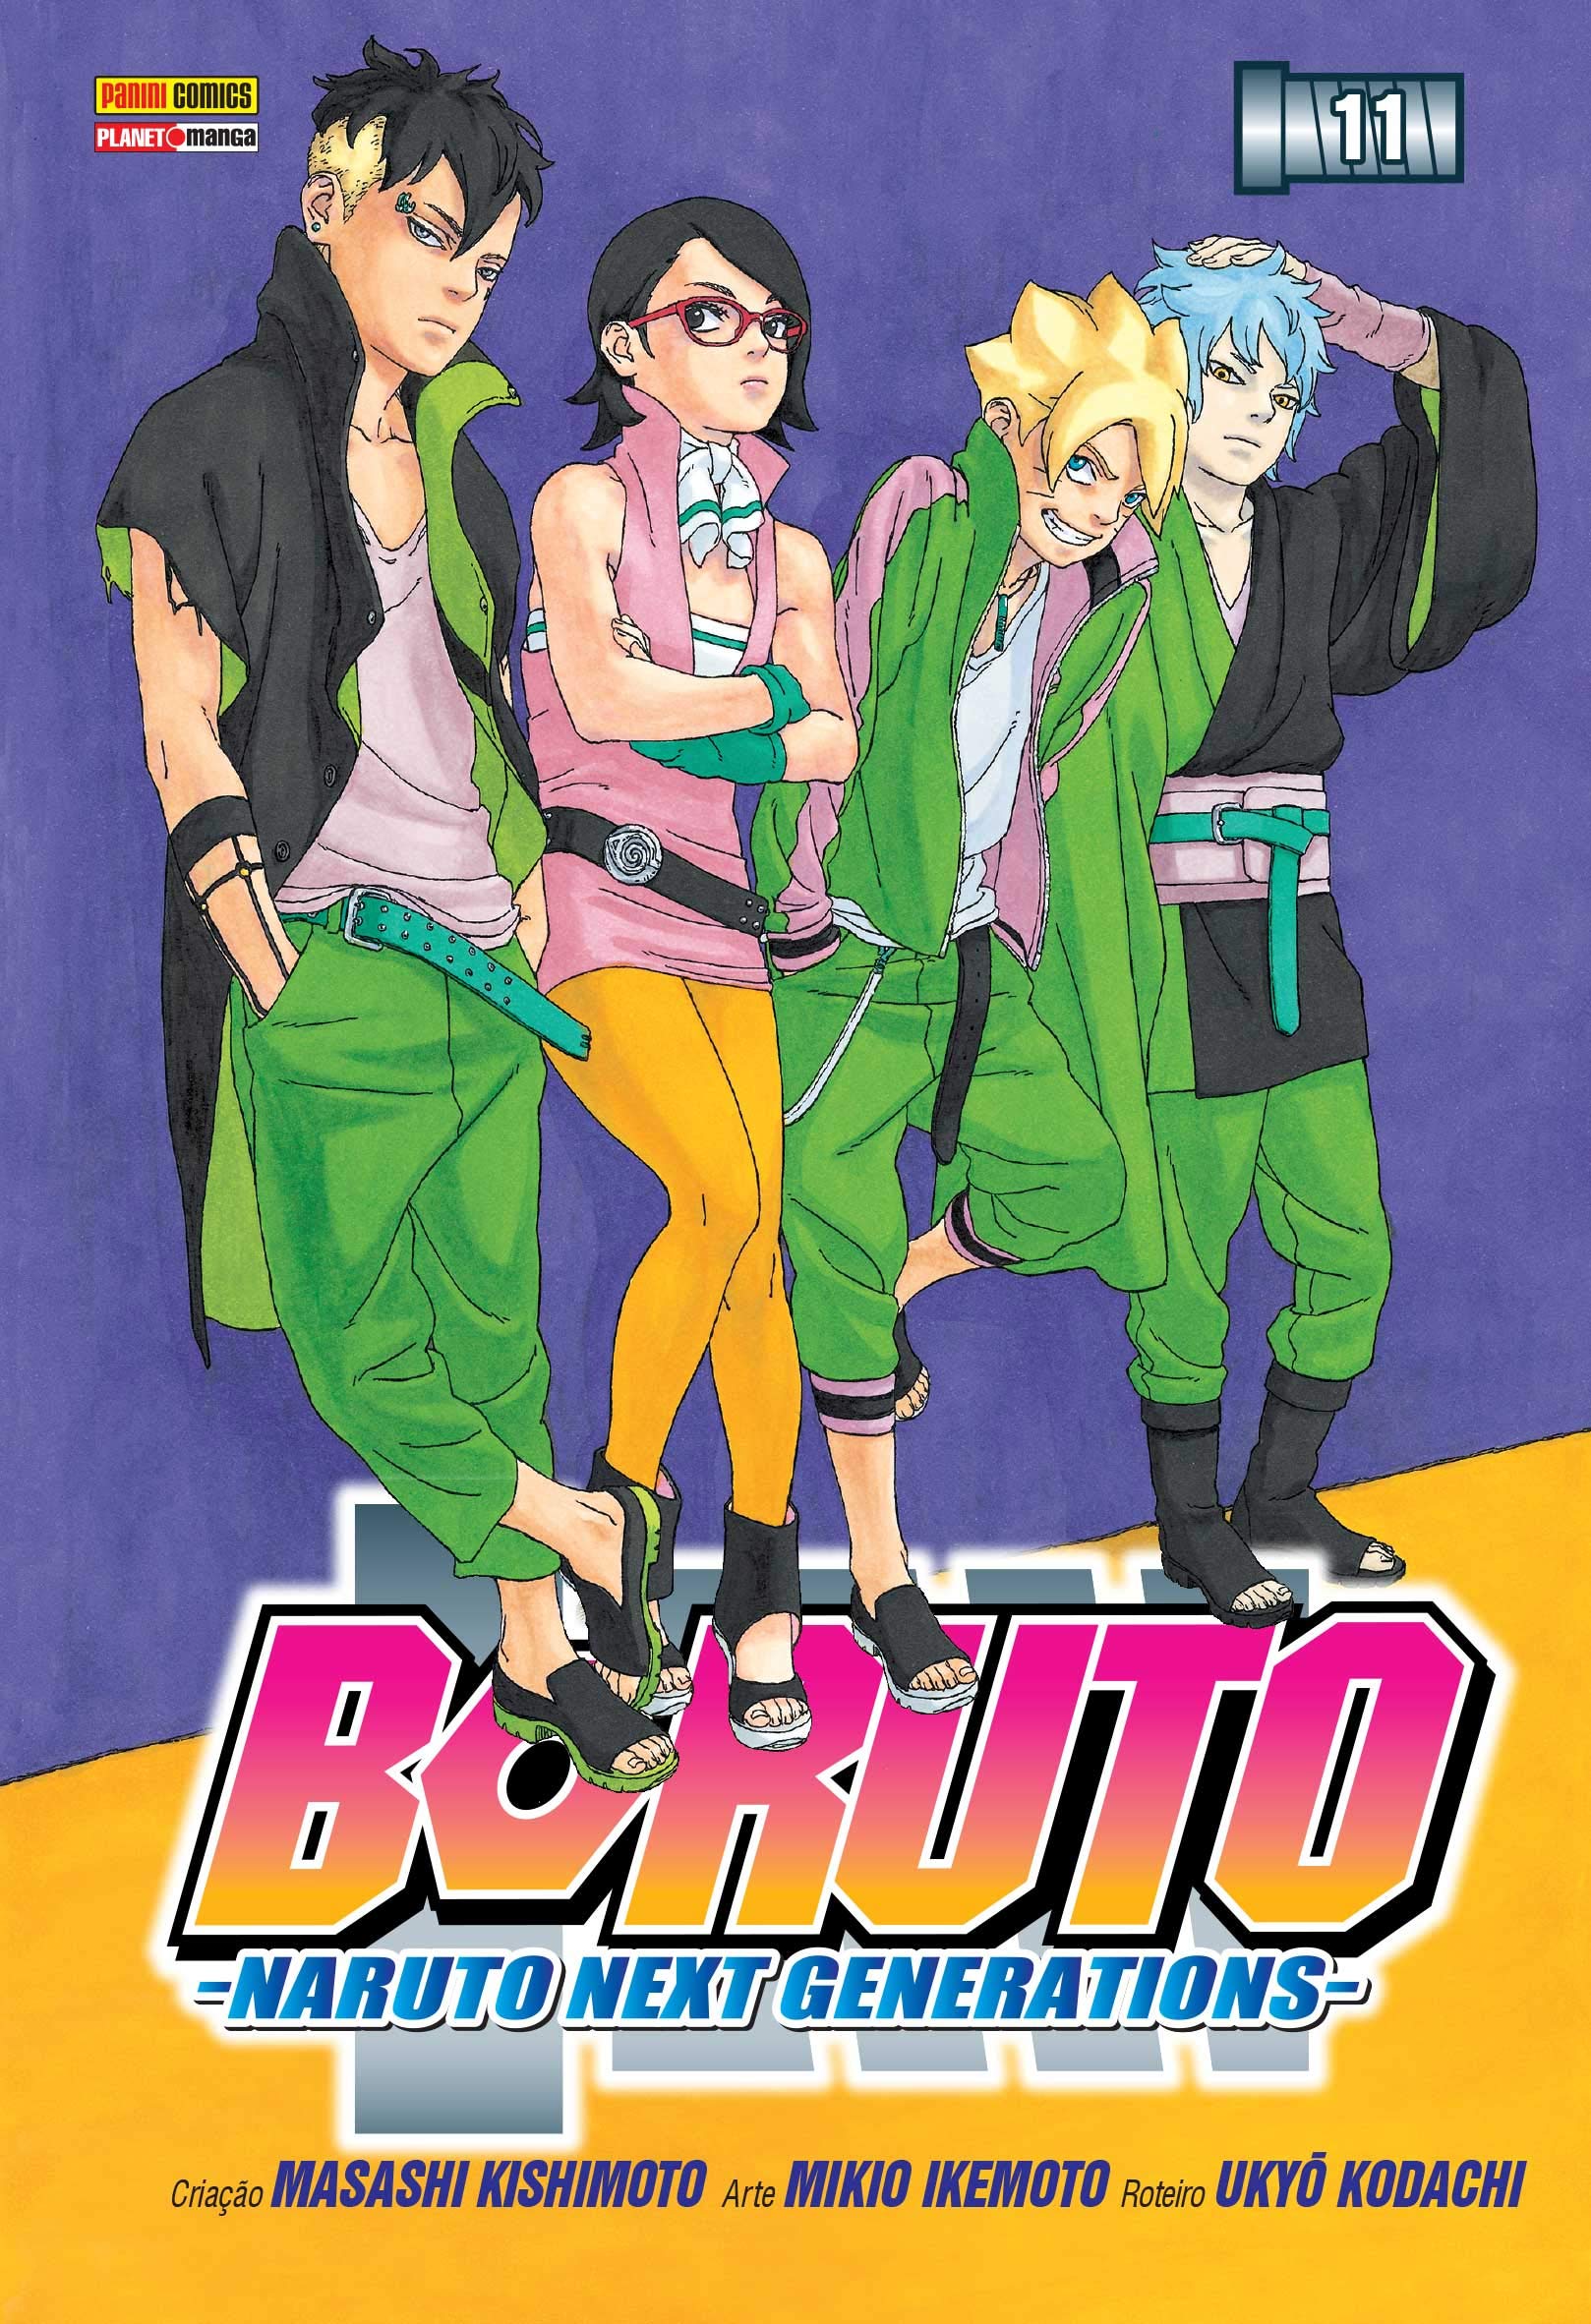 História Naruto : Boruto Next Generation interativa - História